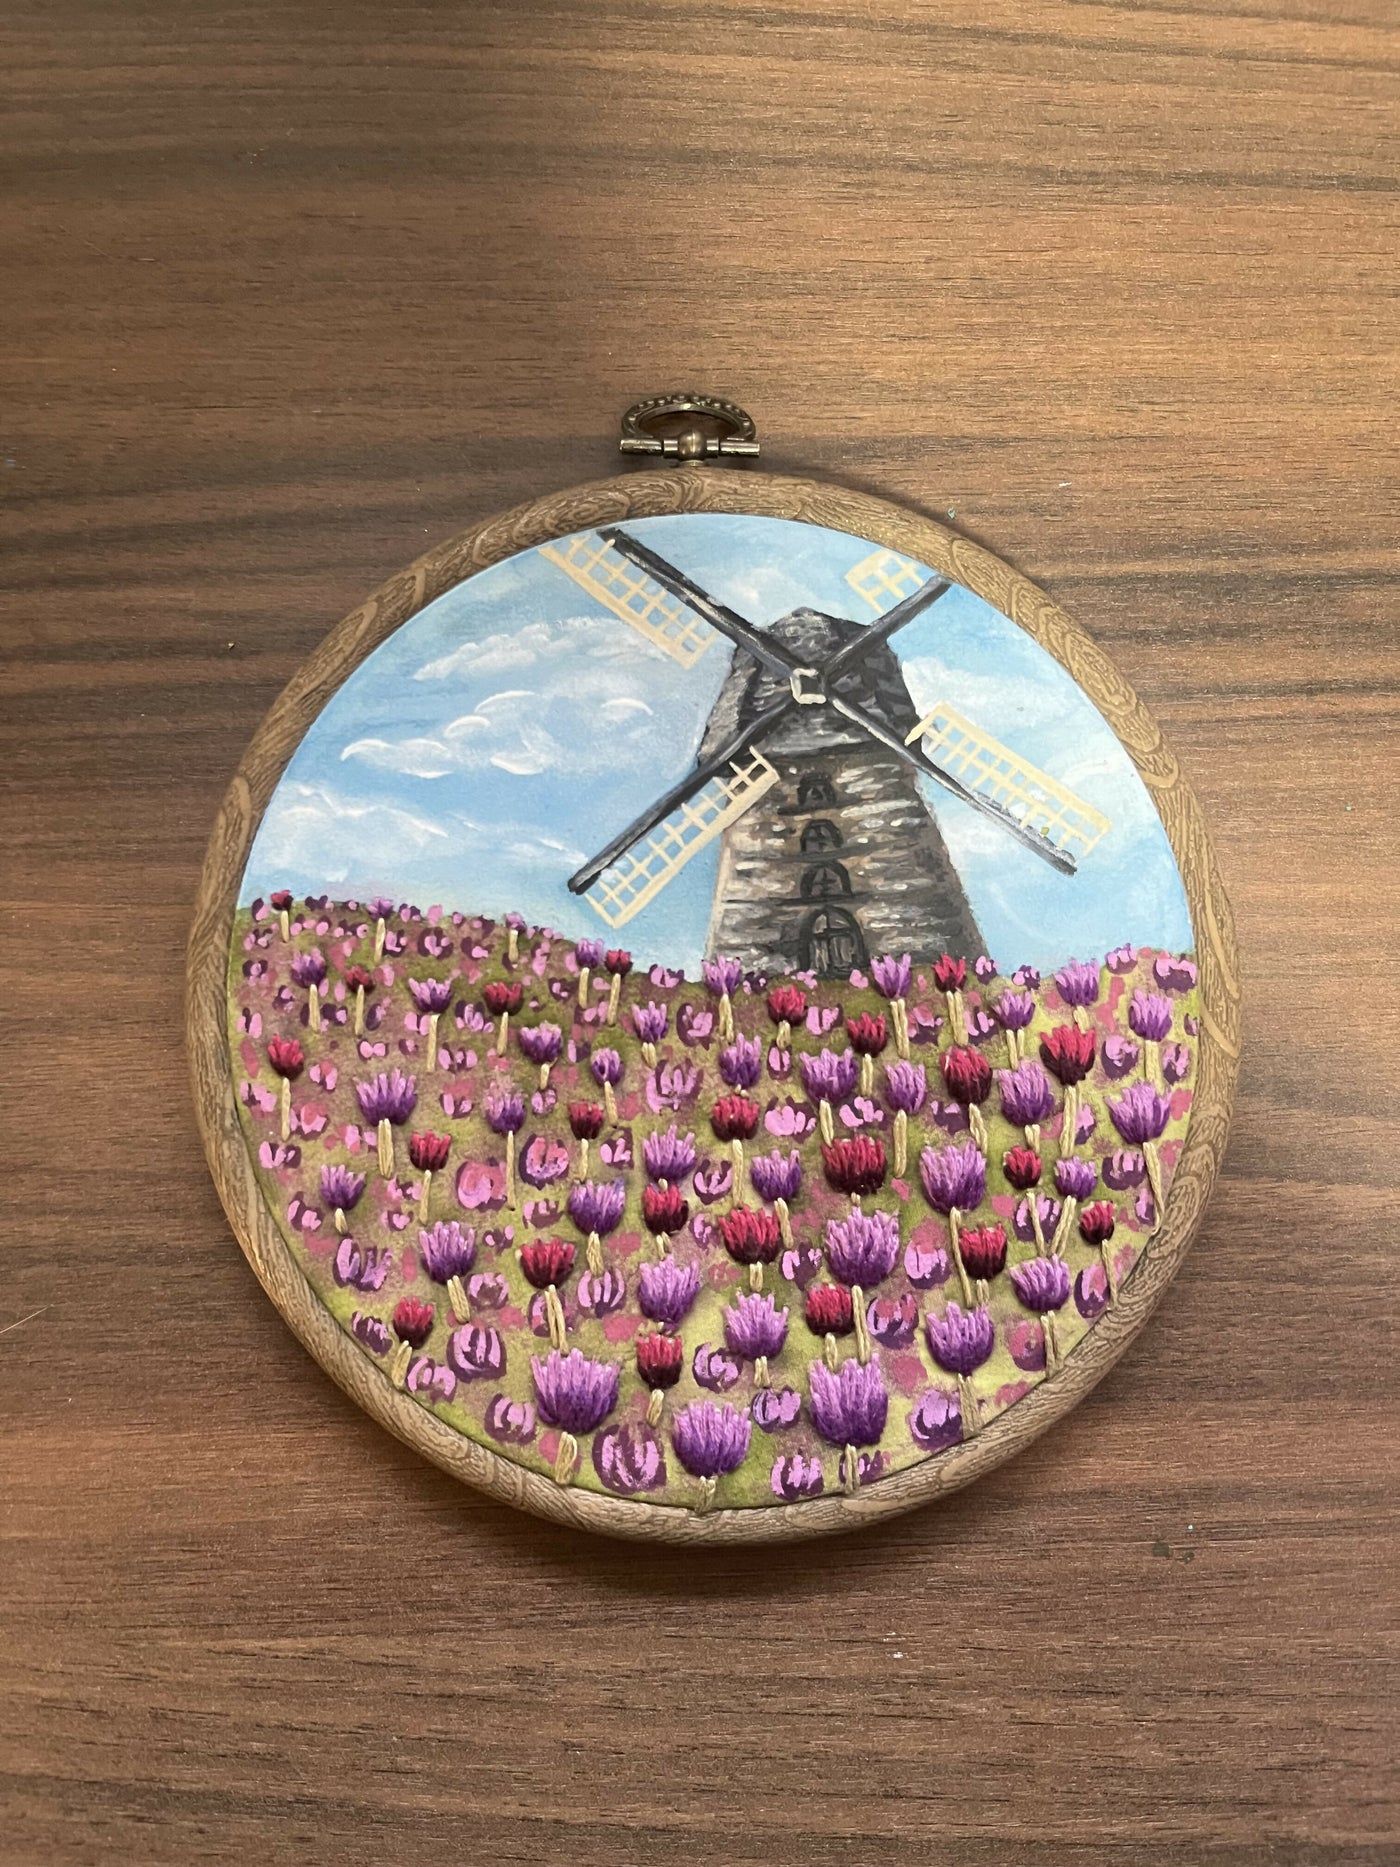 Embroidered Tulip field w/ windmill